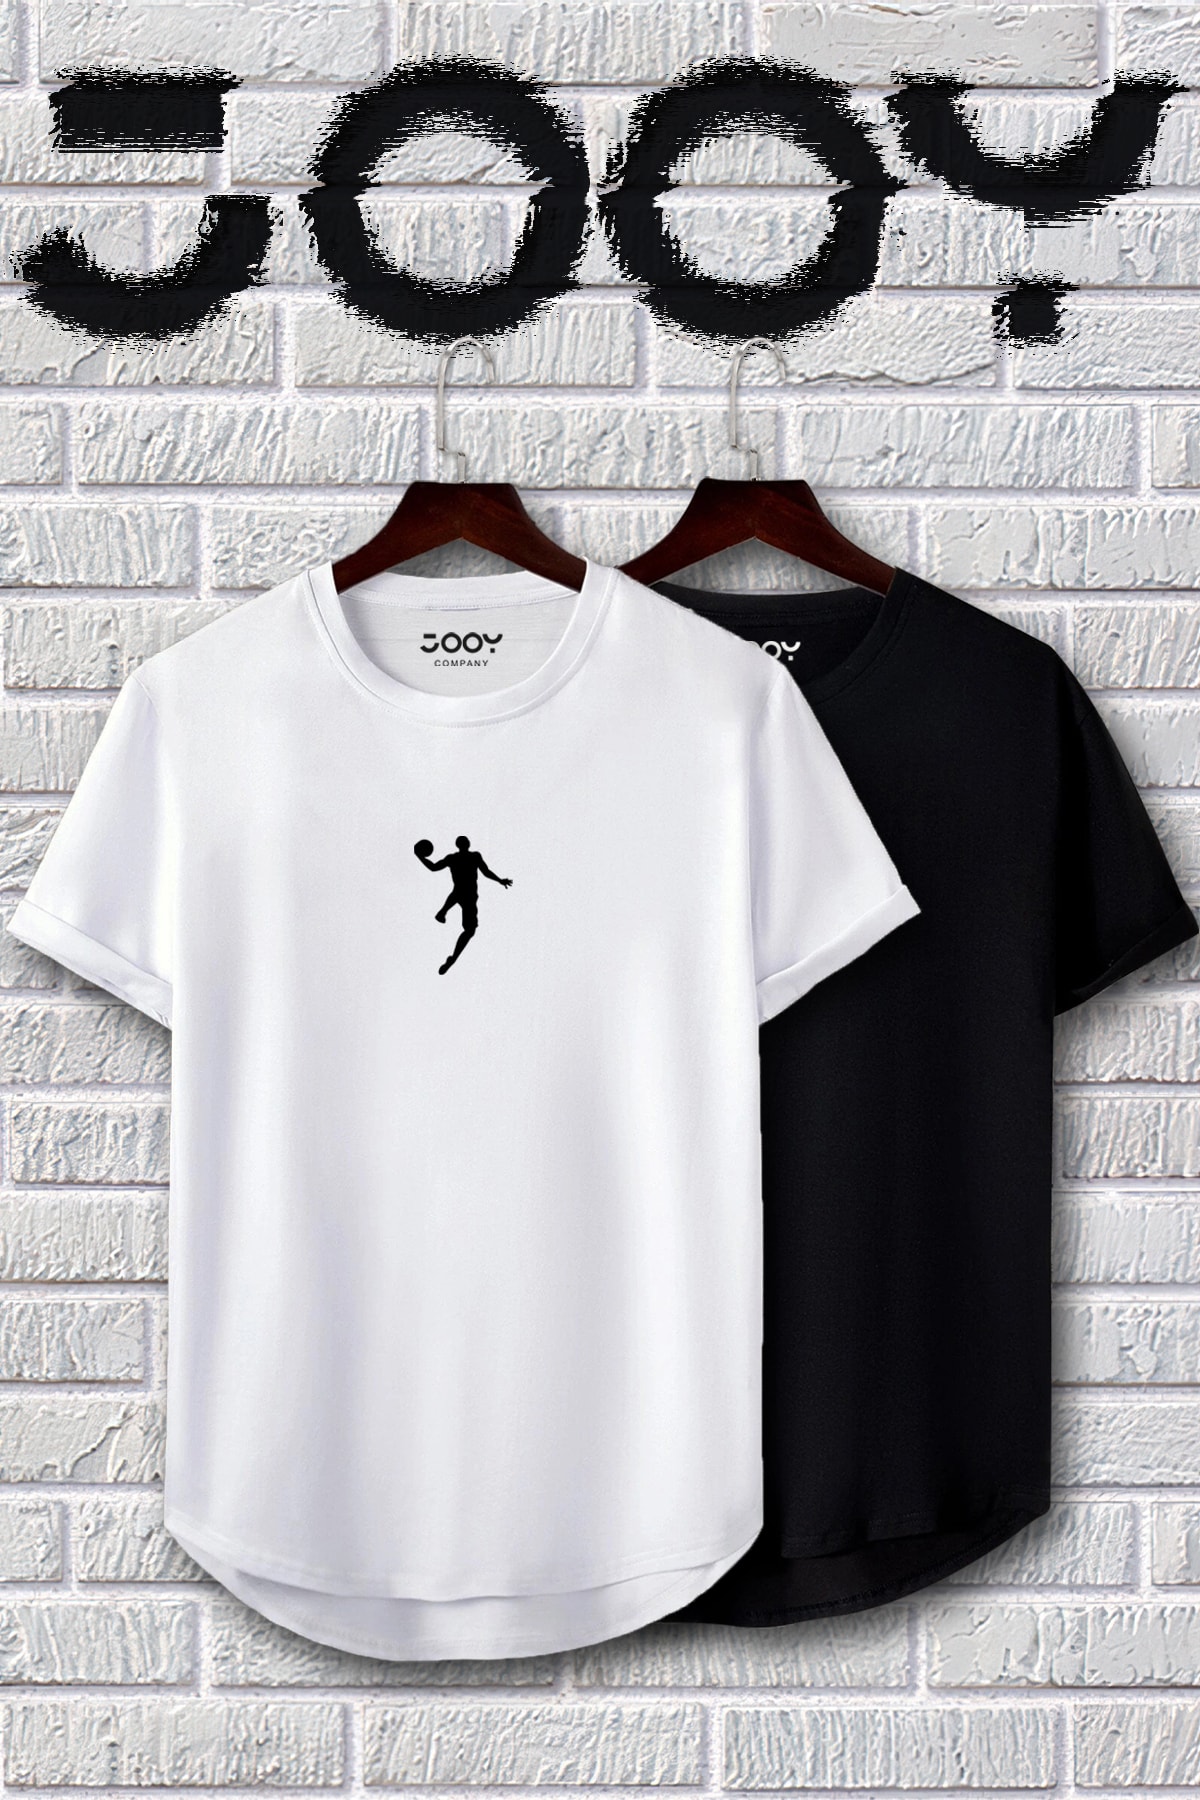 Jooy Company Siyah Beyaz Basketball Player Slim Fit Tshirt Ikili Set